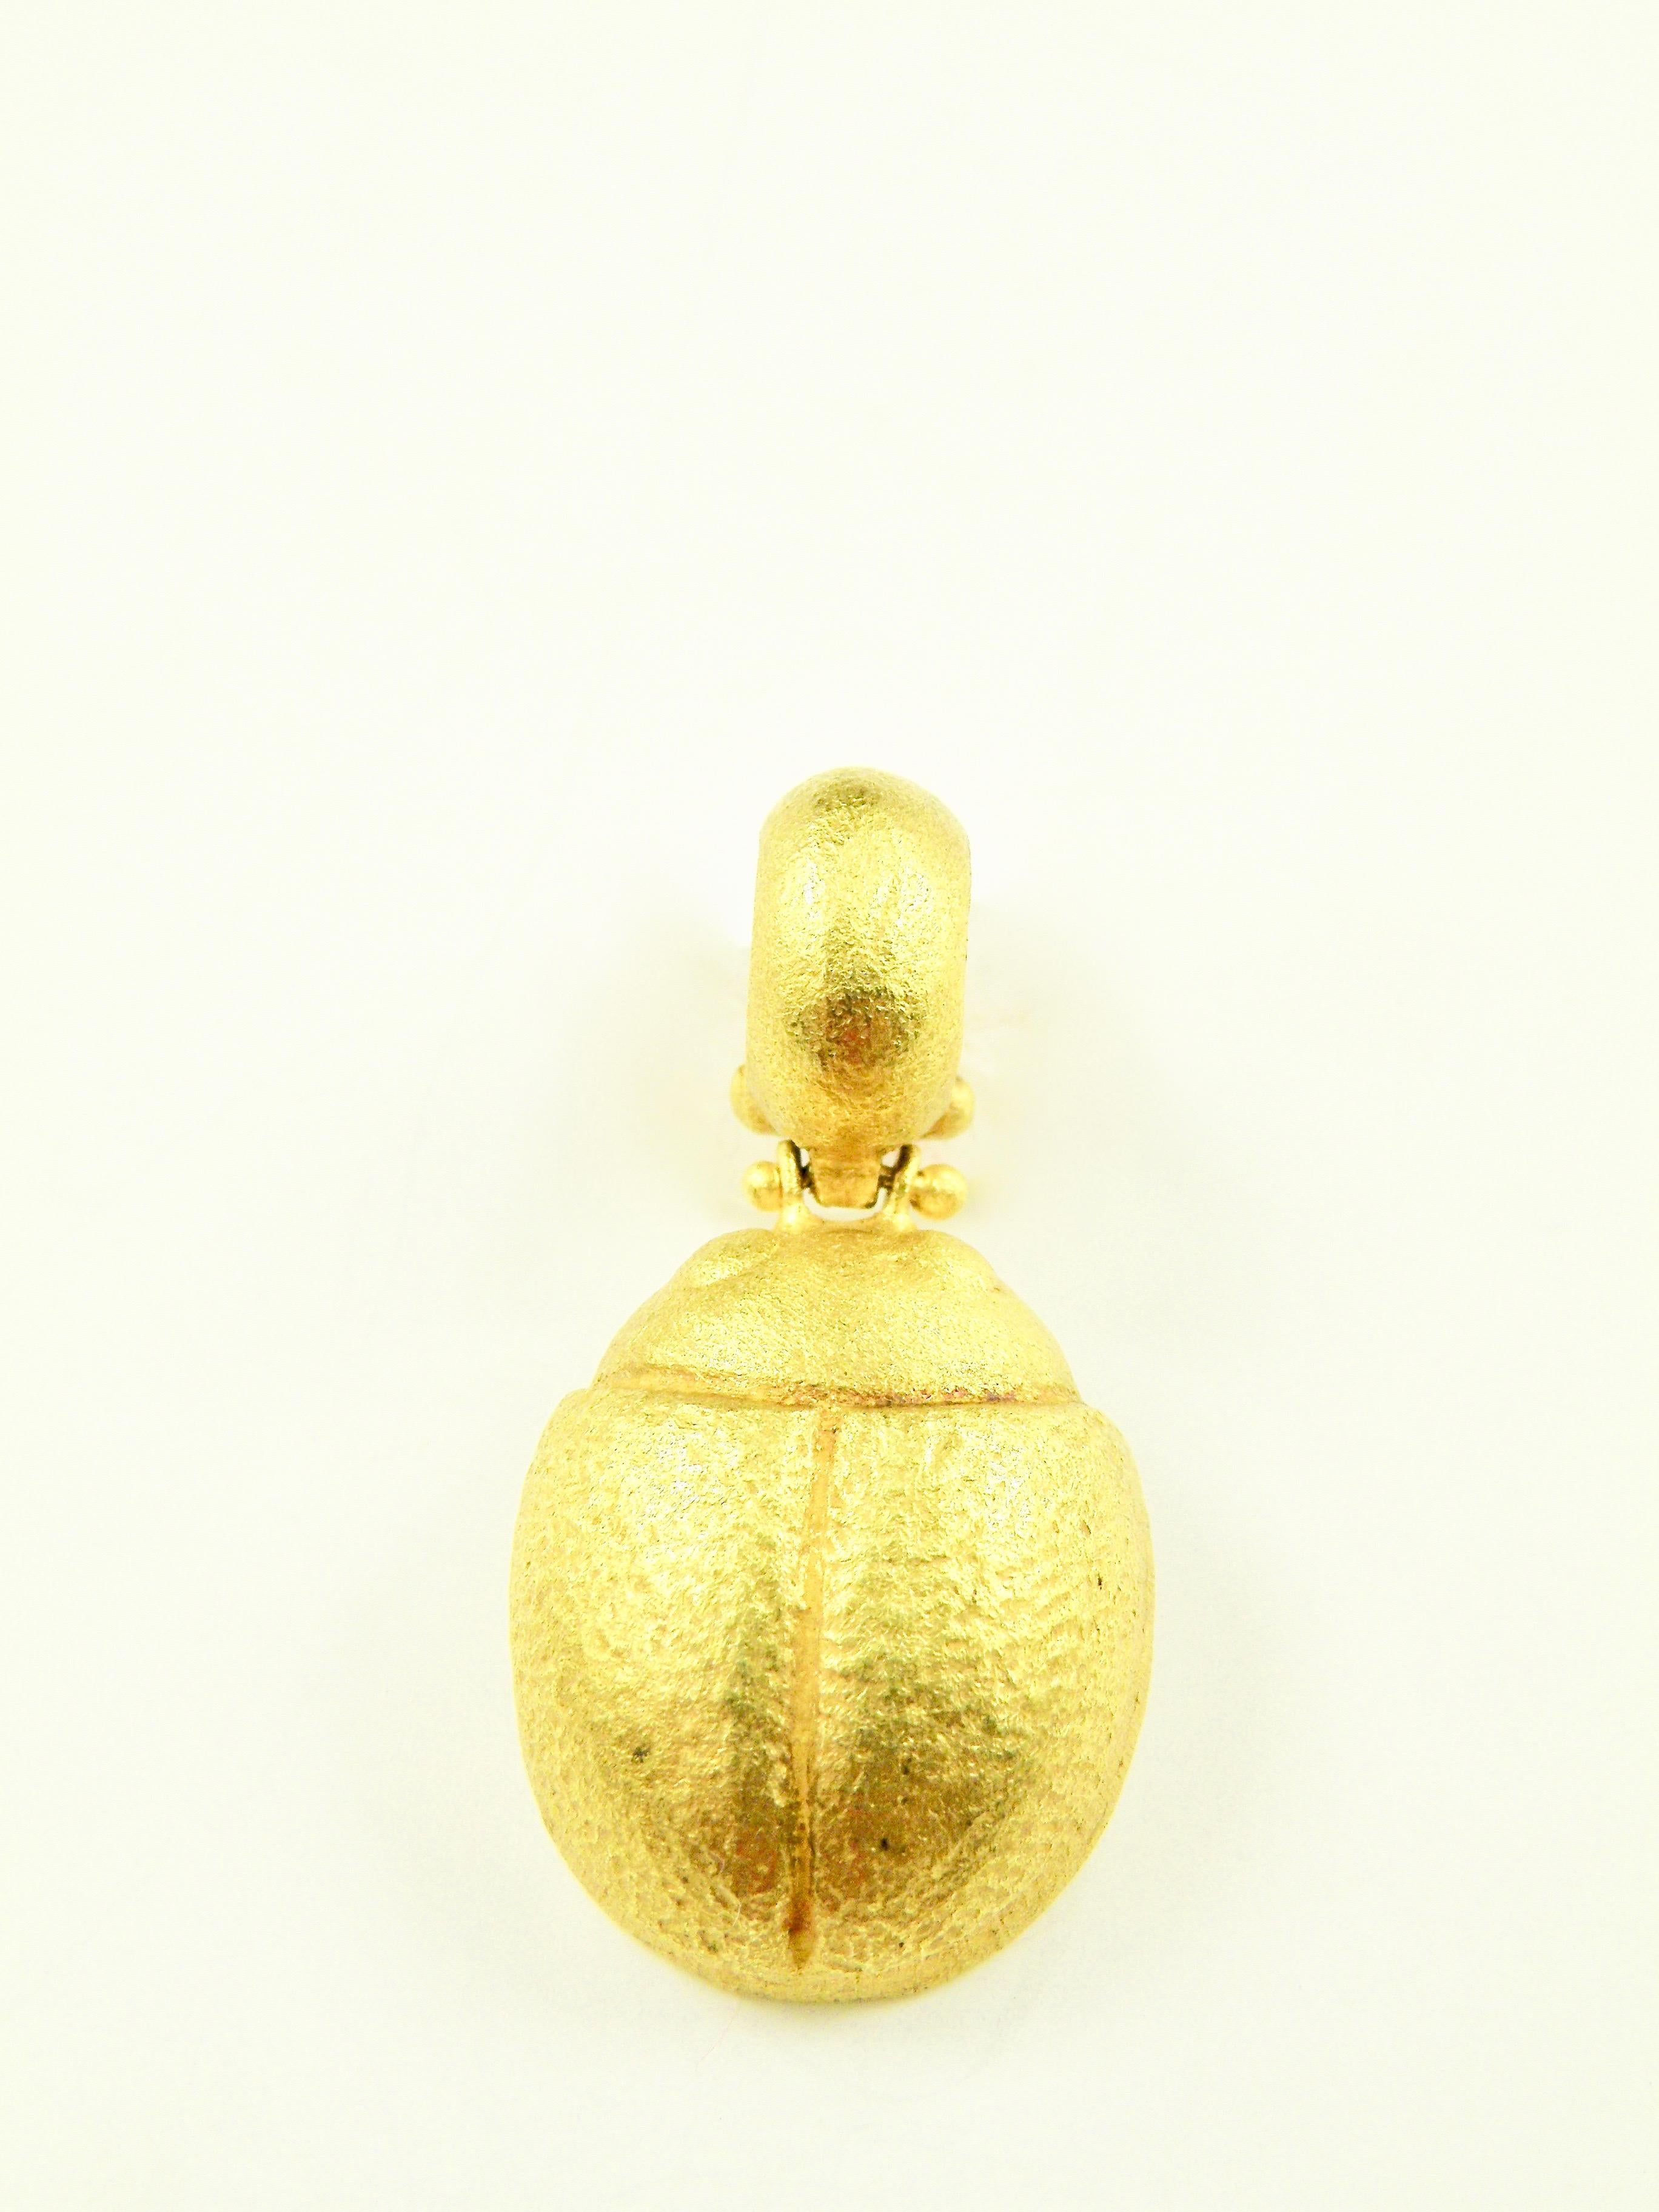 Exquisite 18 karat solid gold scarab designed by Italian designer Paola Ferra
13mm x 18 mm



